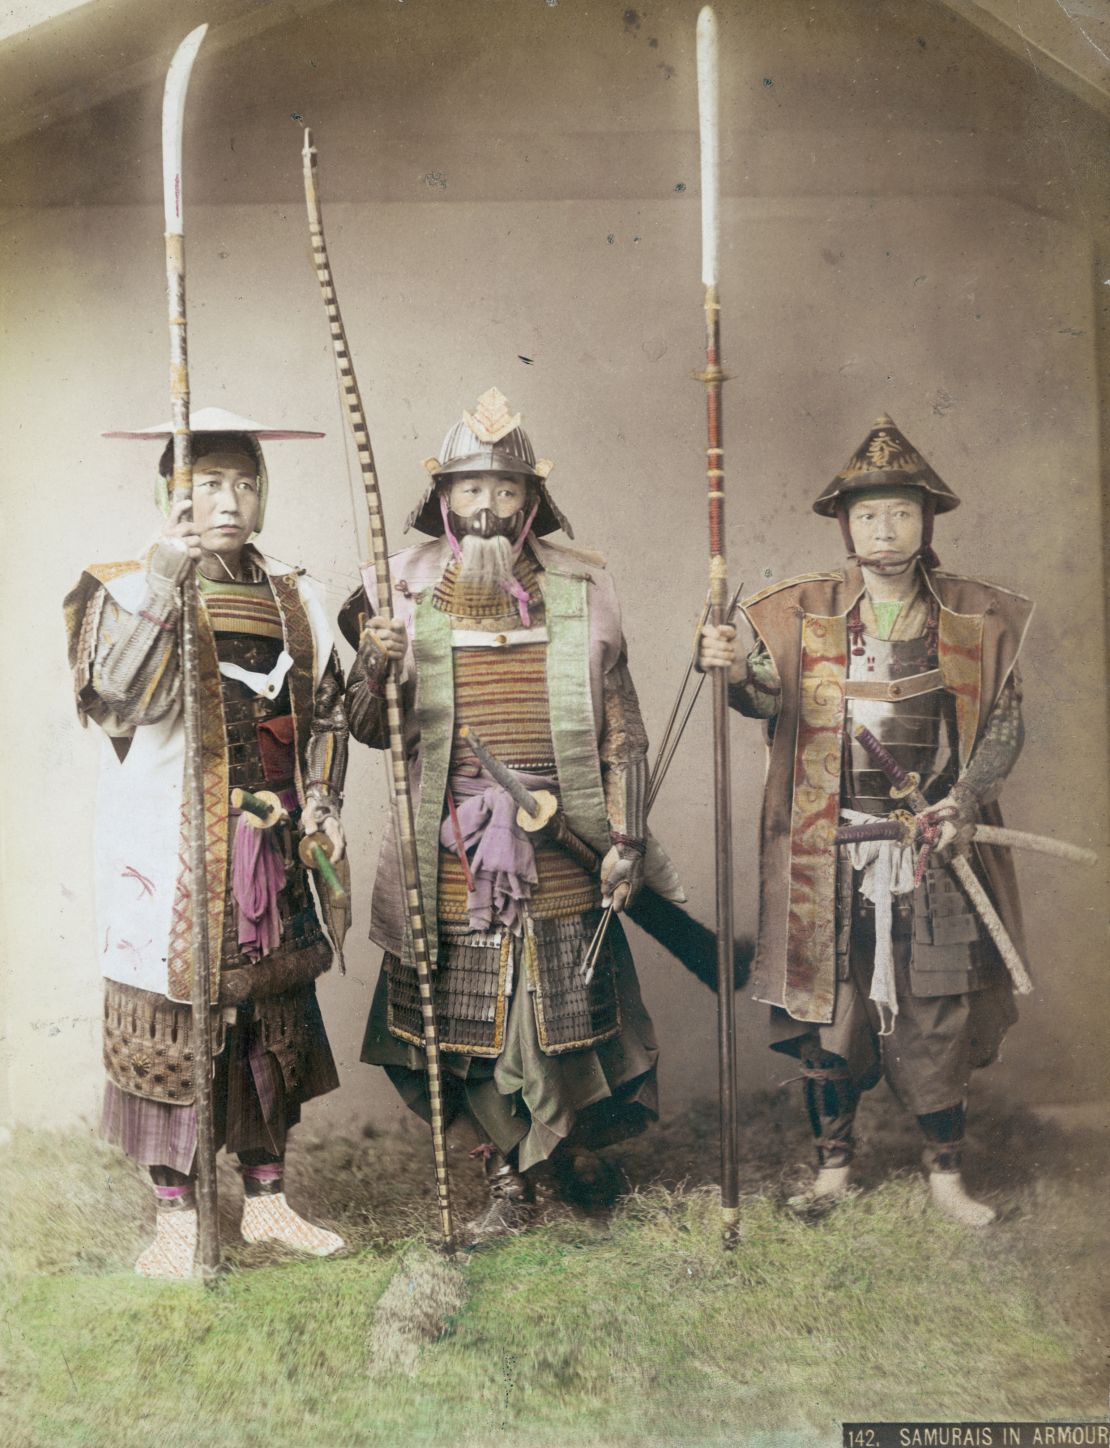 Three samurai warriors in armor, circa 1880.